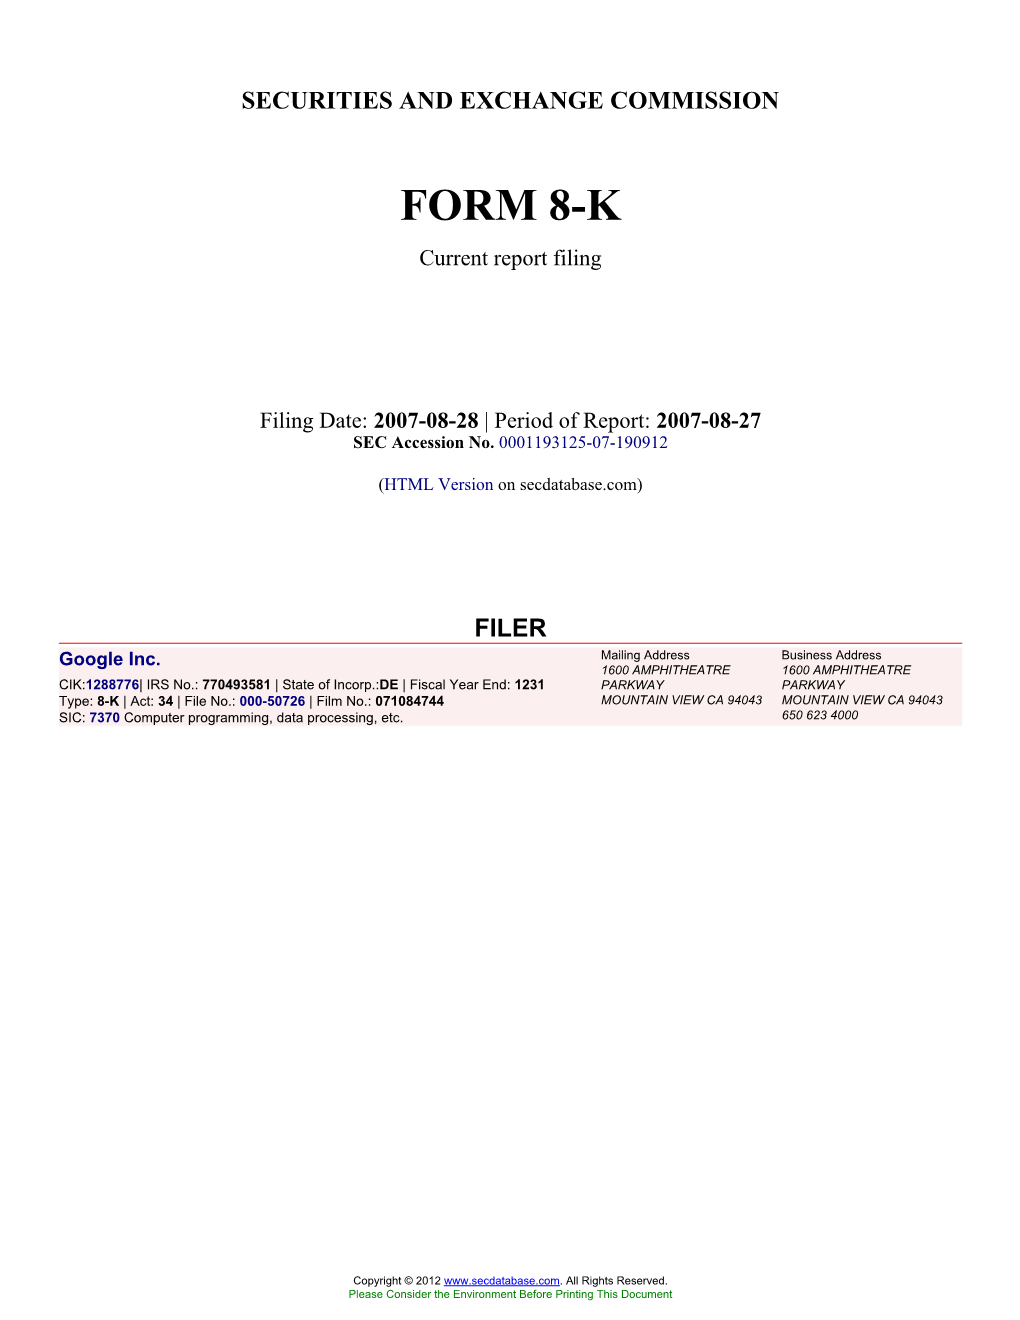 Google Inc. (Form: 8-K, Filing Date: 08/28/2007)